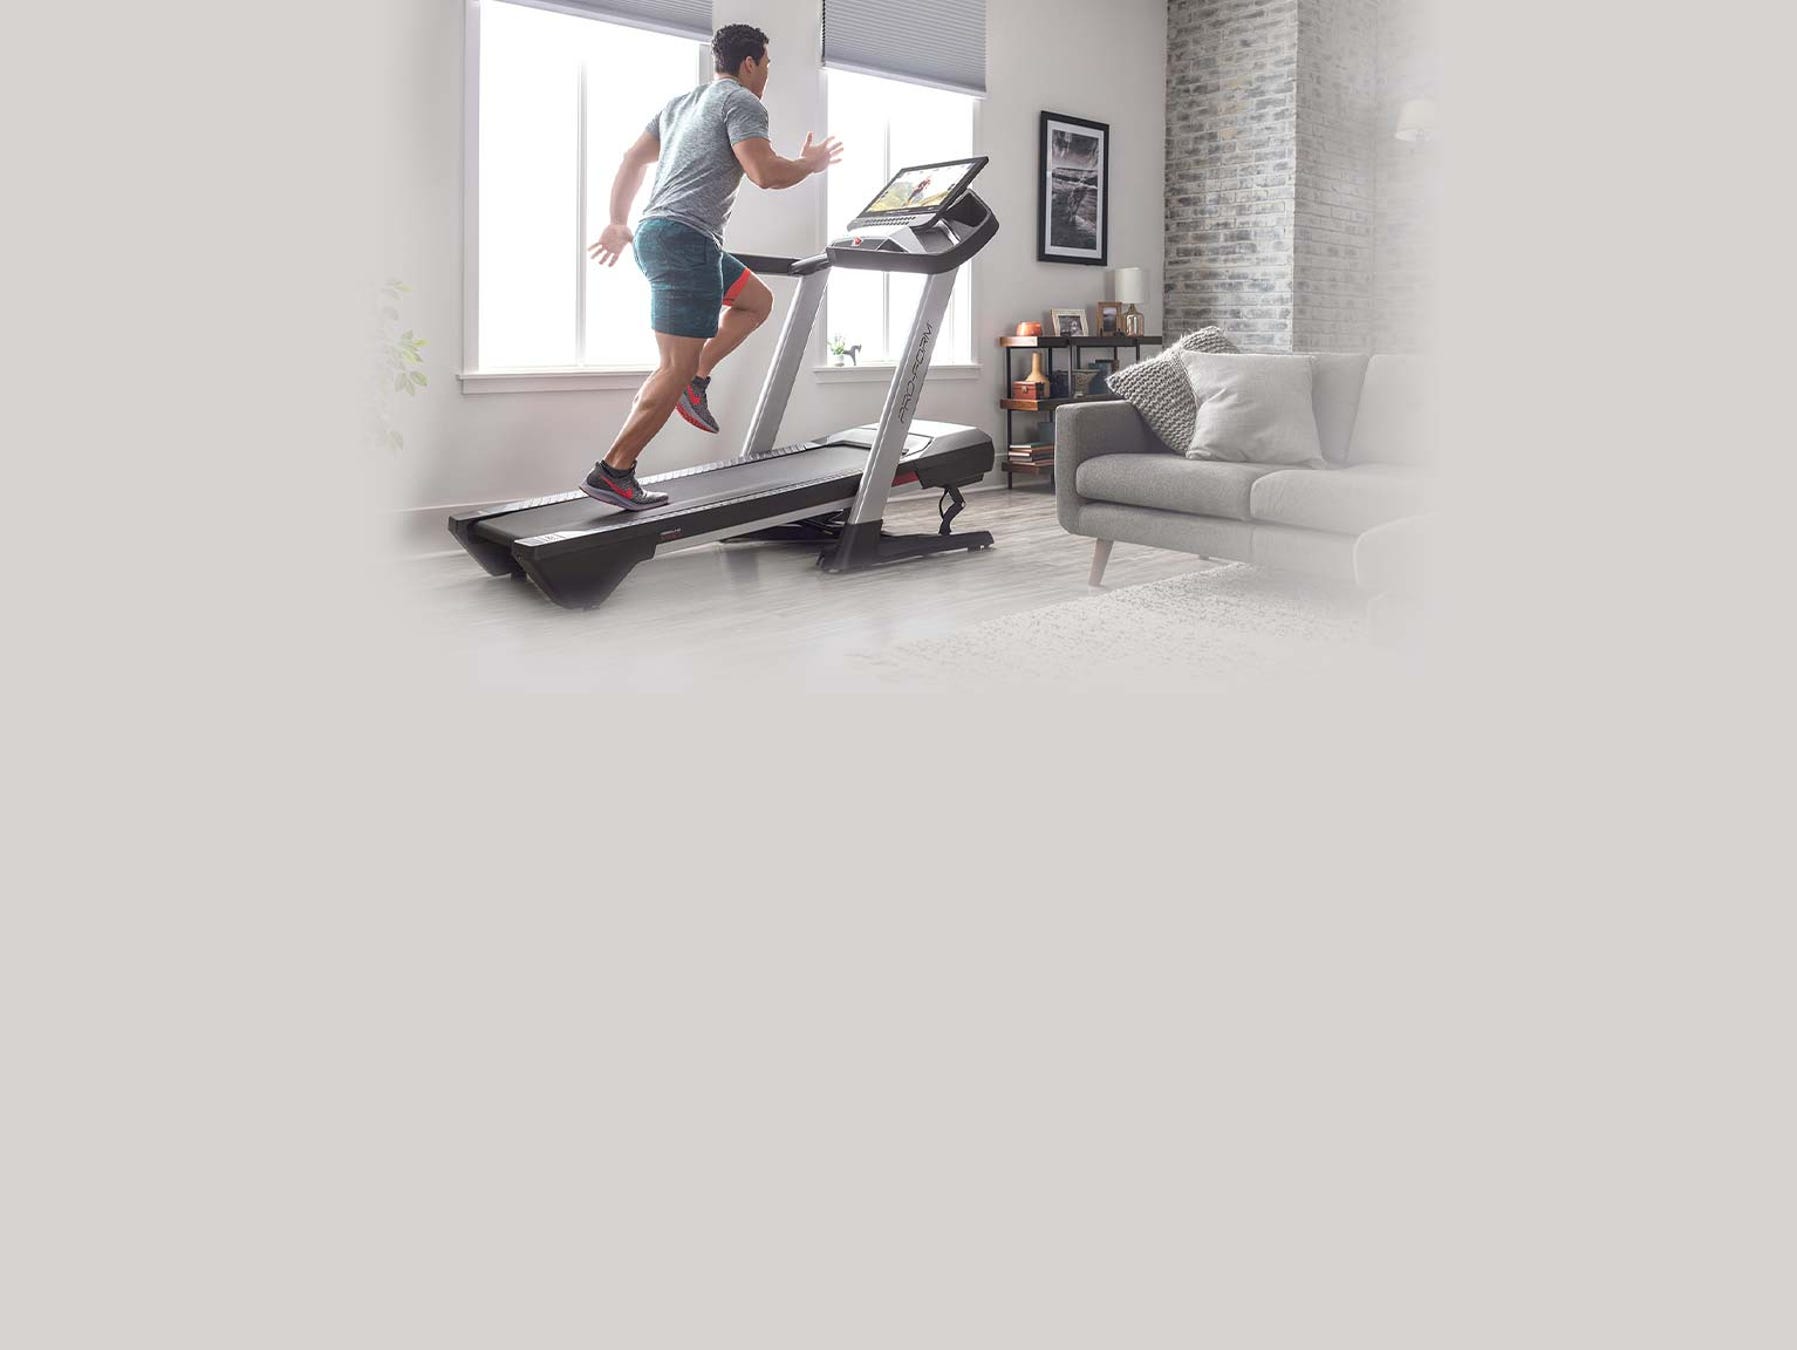 Buy Fitness Equipment, Gym Accessories Online